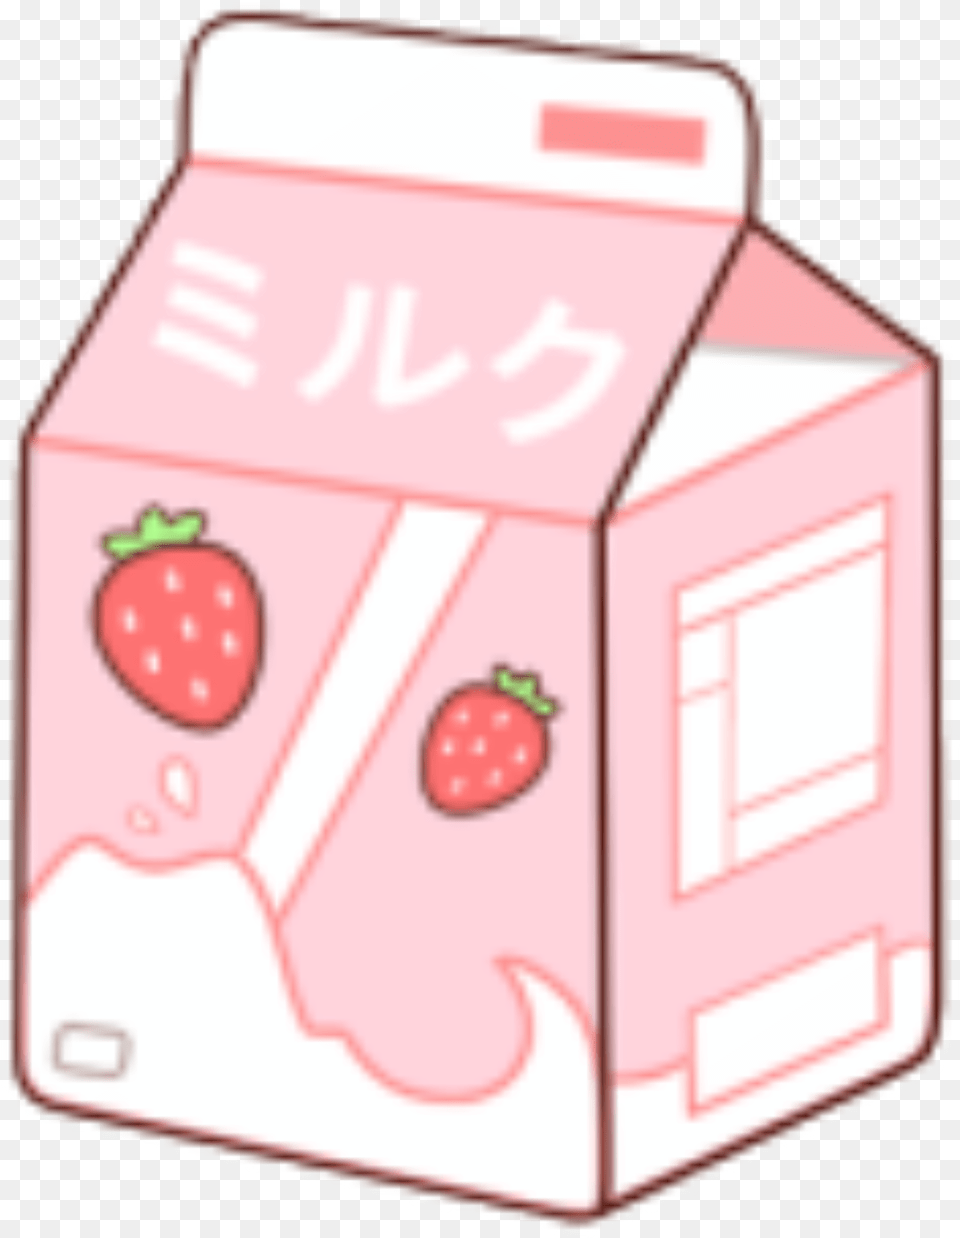 Strawberry Milk Carton Sticker By Bts X Ari Milk Carton Stickers, Beverage, Box, Cardboard, First Aid Free Png